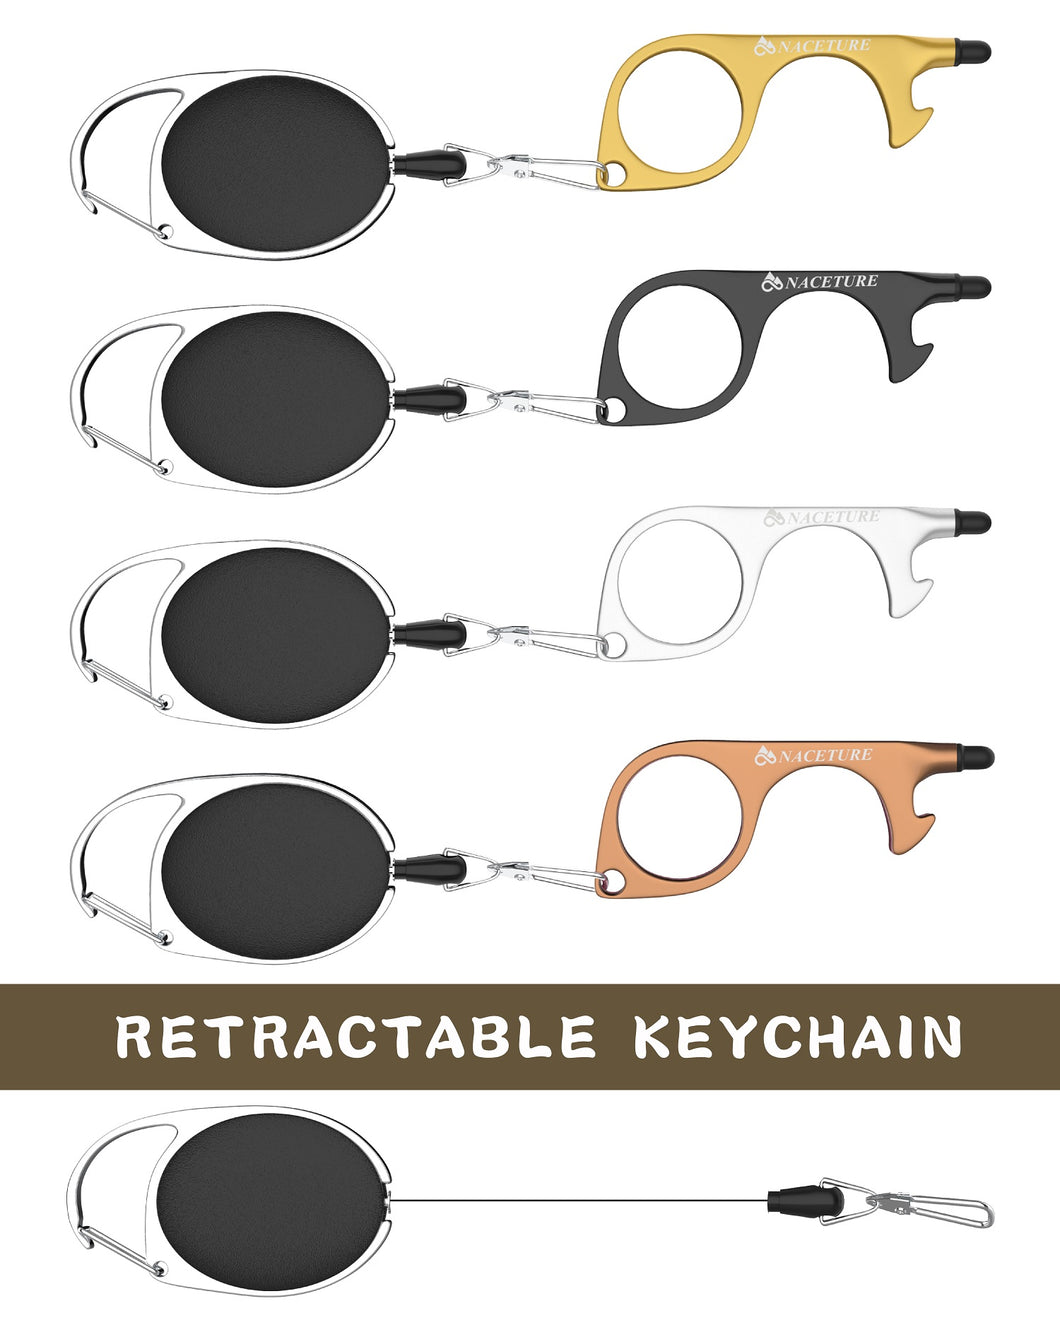 No Touch Door Opener Tool, Pack of 4 with Retractable Keychain